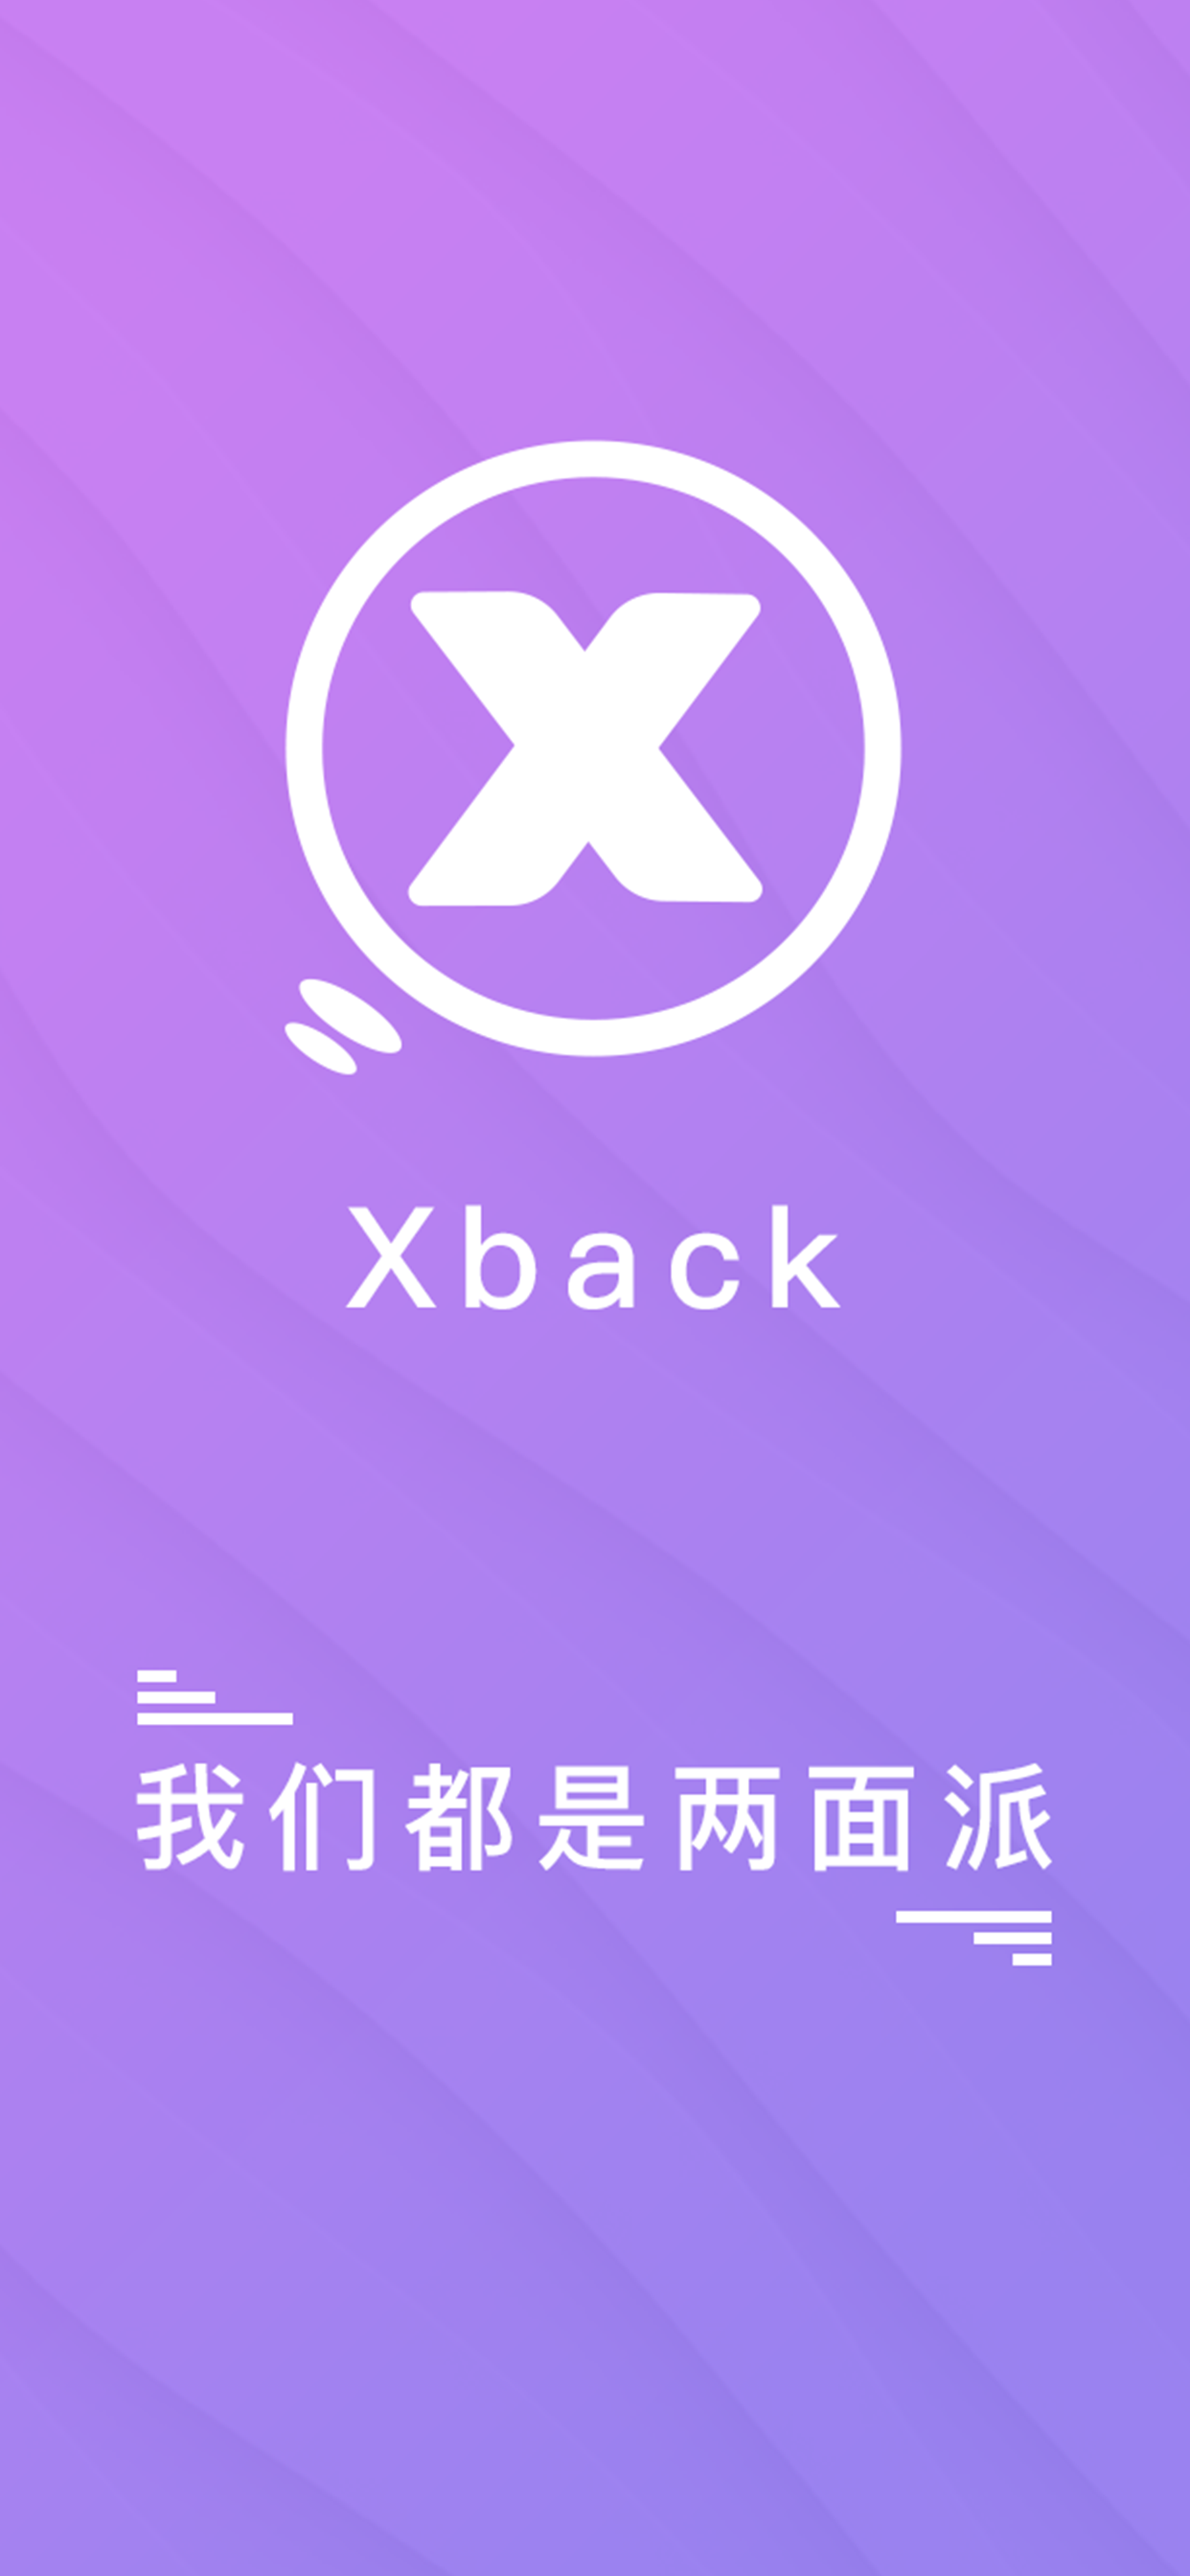 Xback